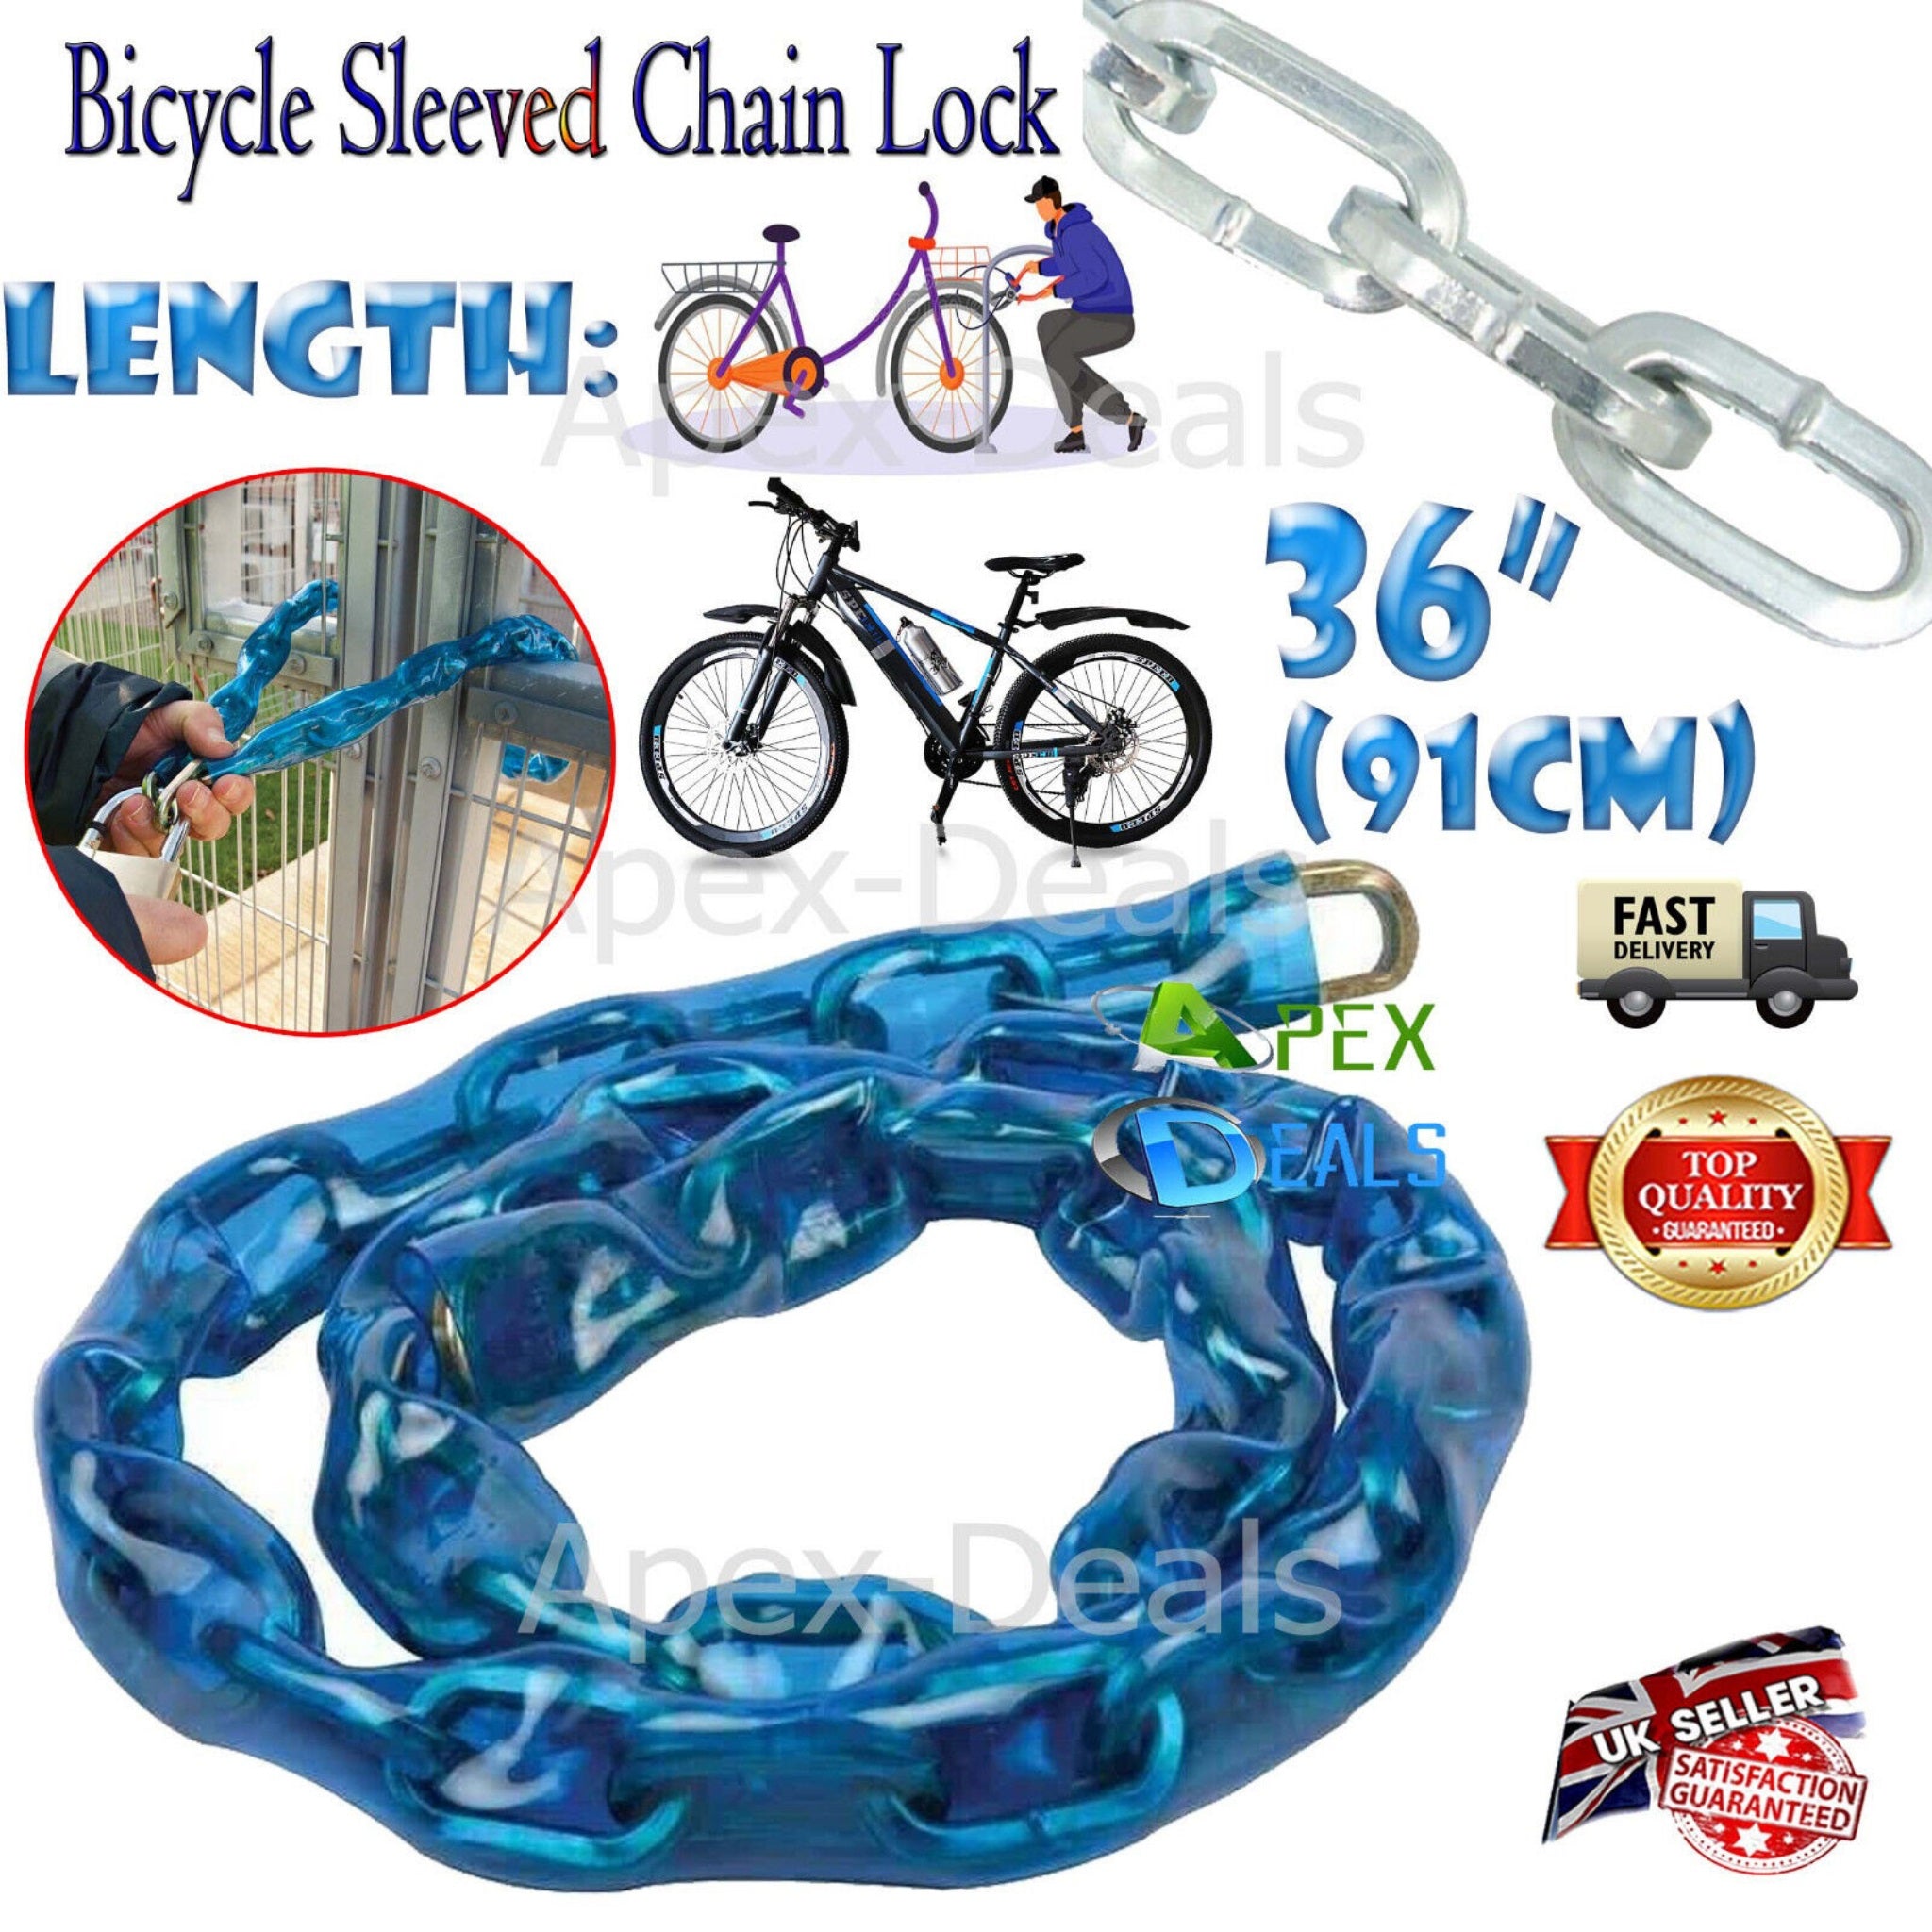 Beclen Harp Heavy Duty 91cm Bike Link Chain Sleeved Lock For Motorbike Bike Cycle Security Safety